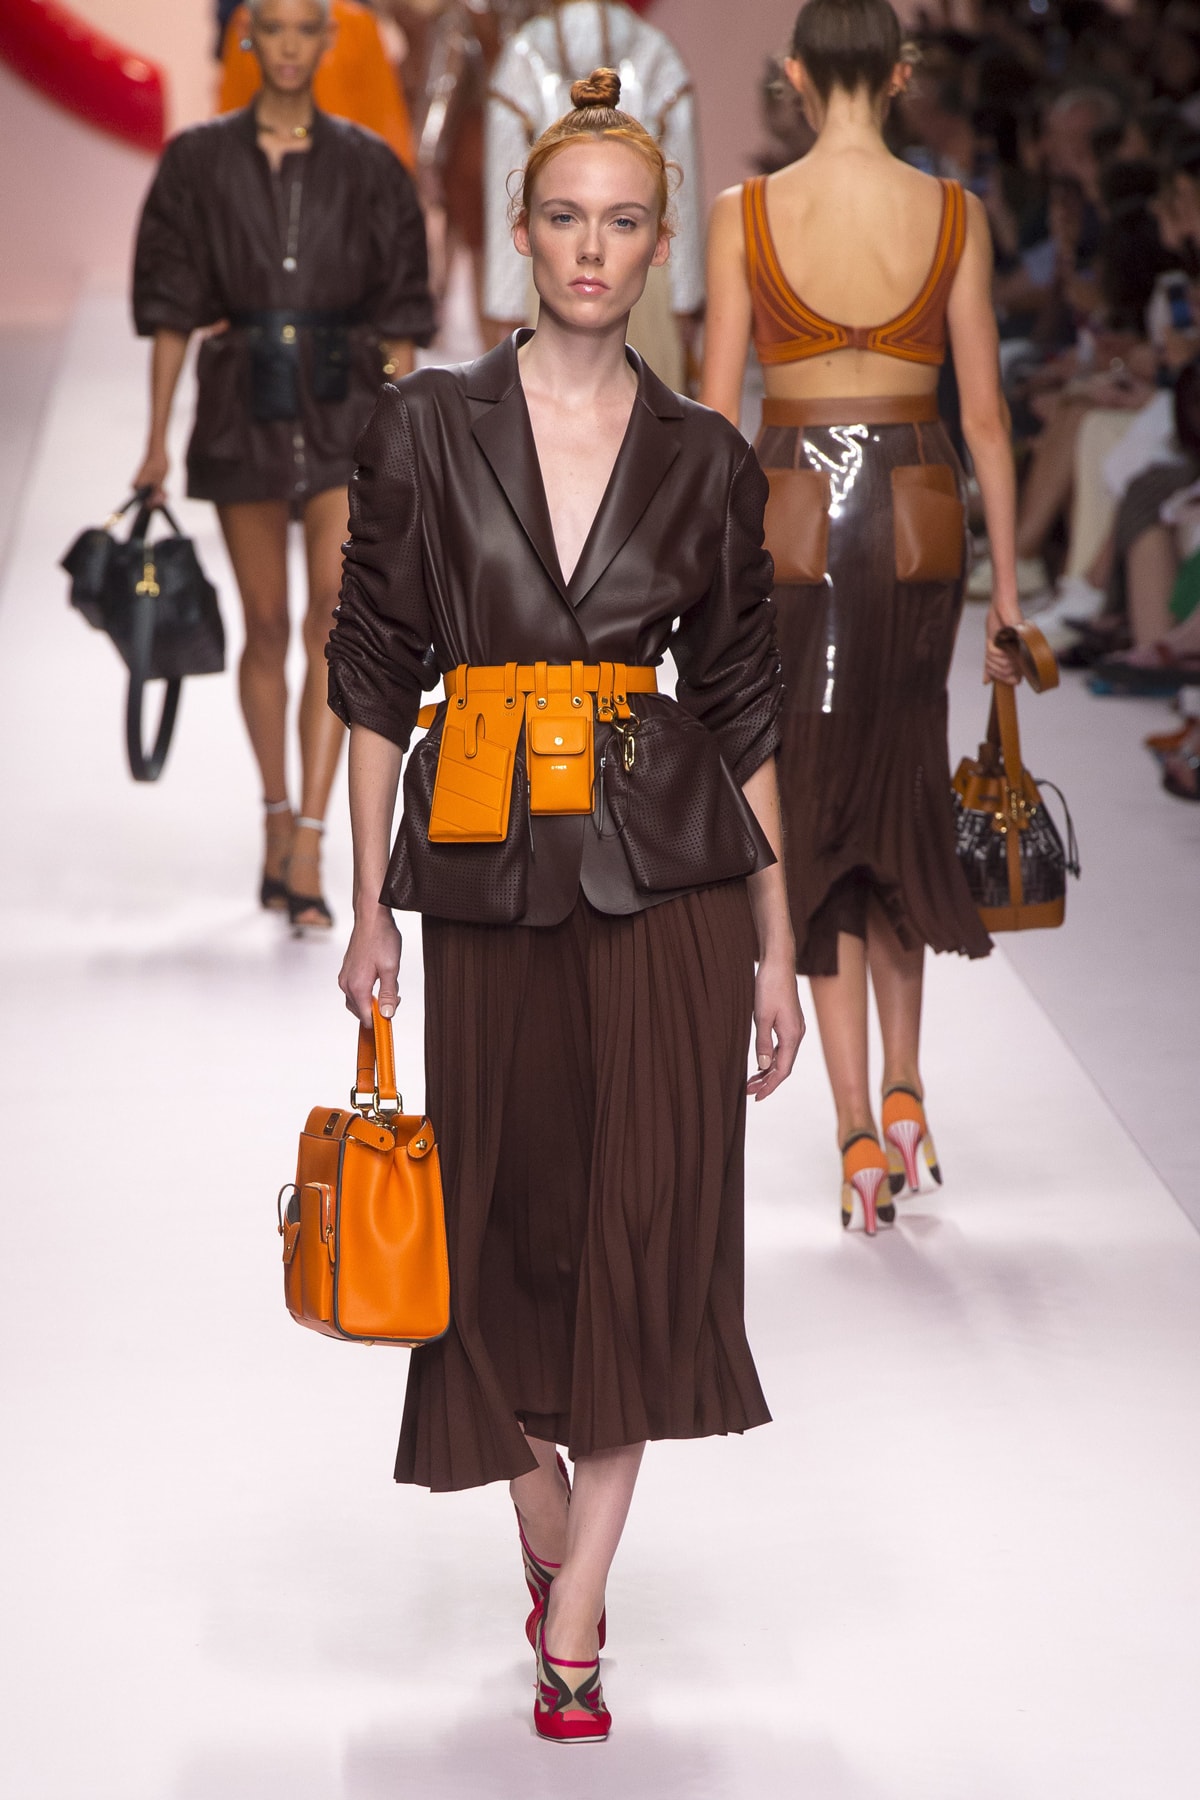 Fendi Karl Lagerfeld Spring Summer 2019 Milan Fashion Week Show Collection Blazer Skirt Brown Belt Bag Orange